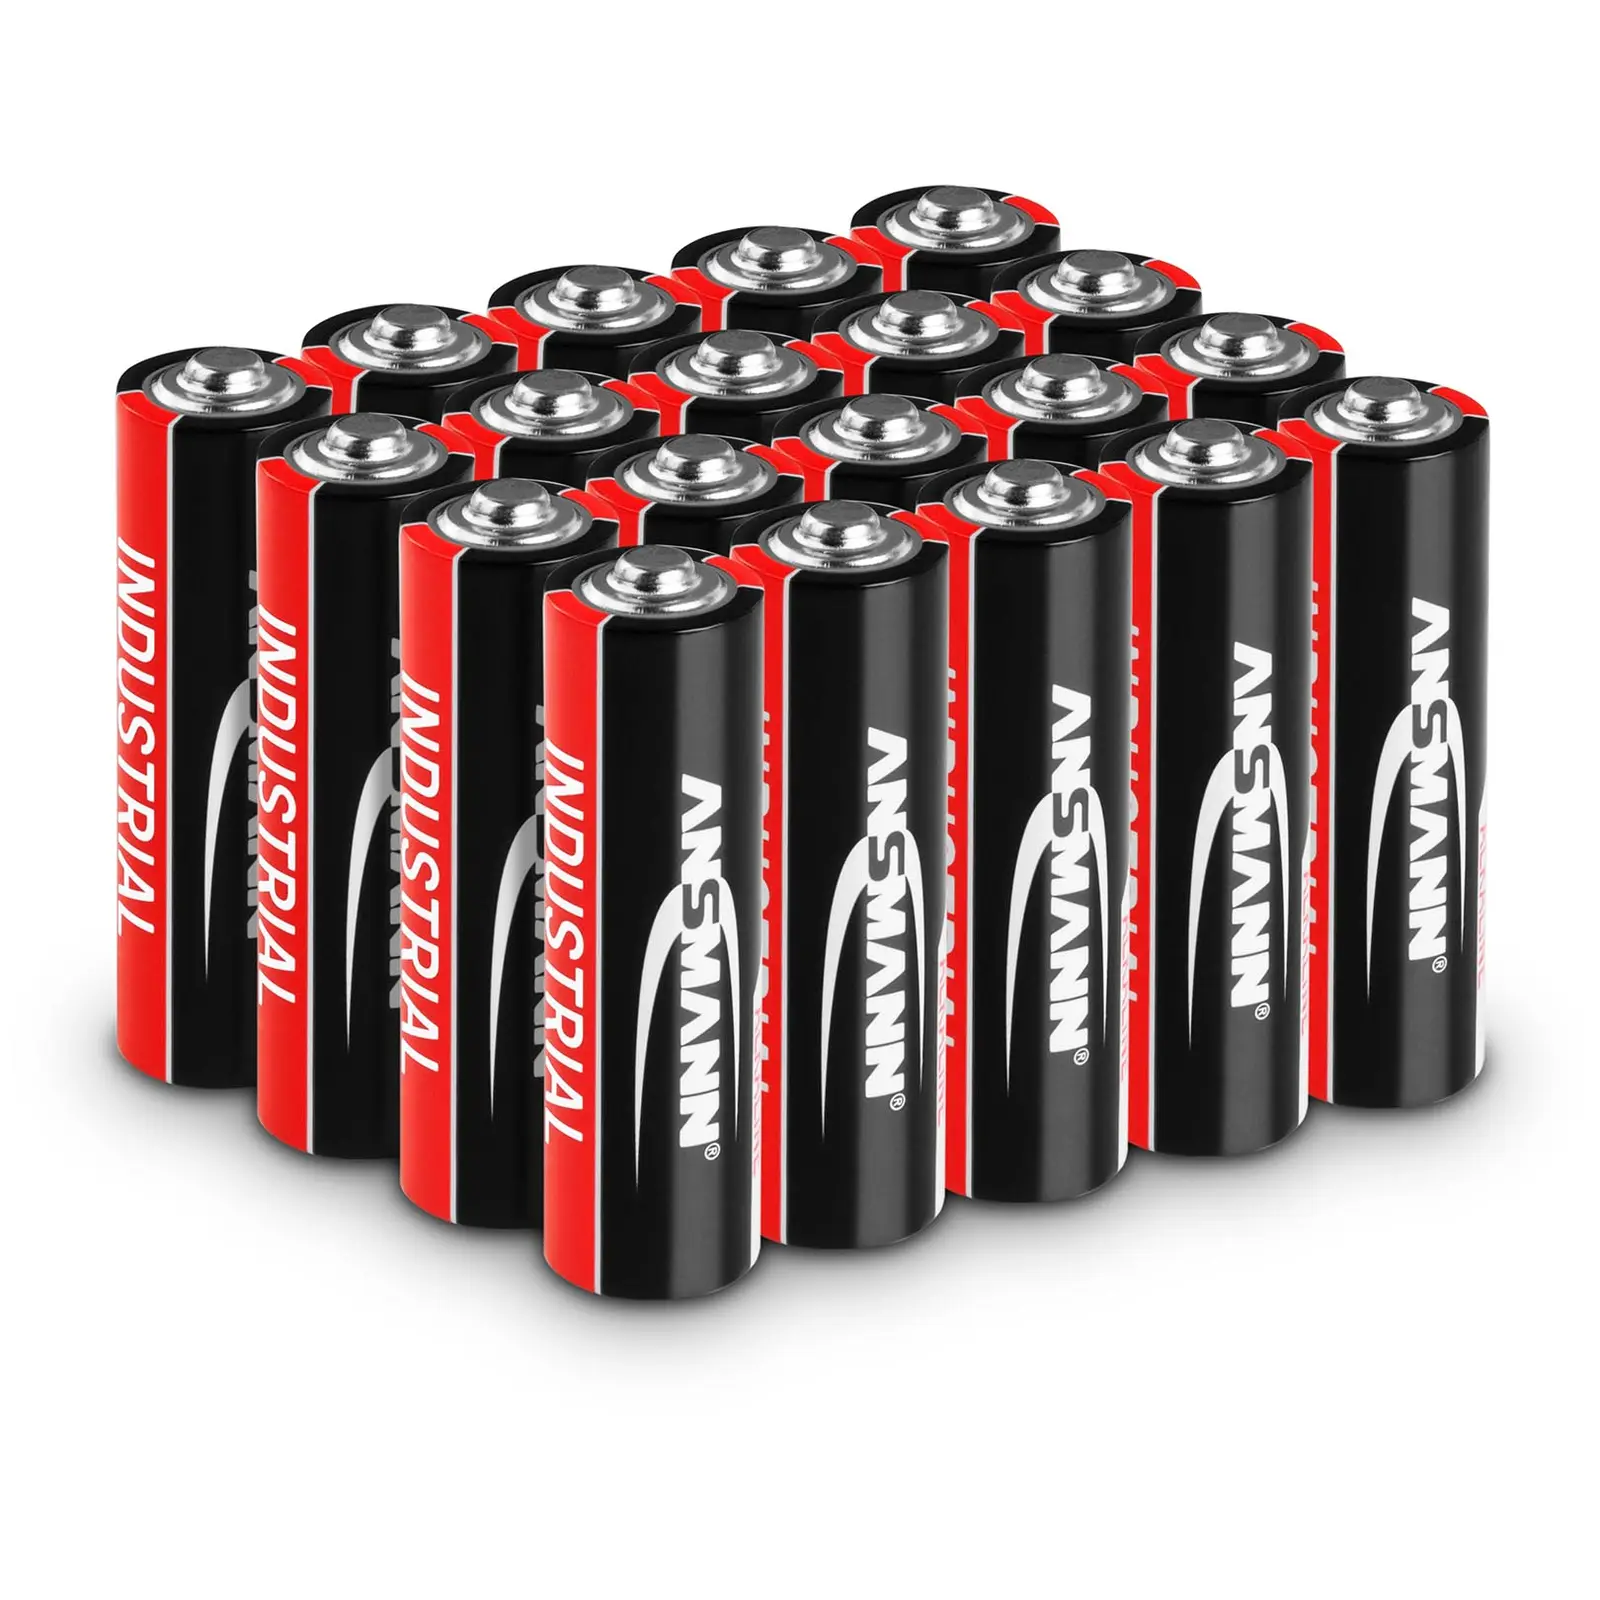 1502-0002 I alkaliczna bateria przemysłowa / alkaline industrial battery / Alkaline Batterie 1,5V AA